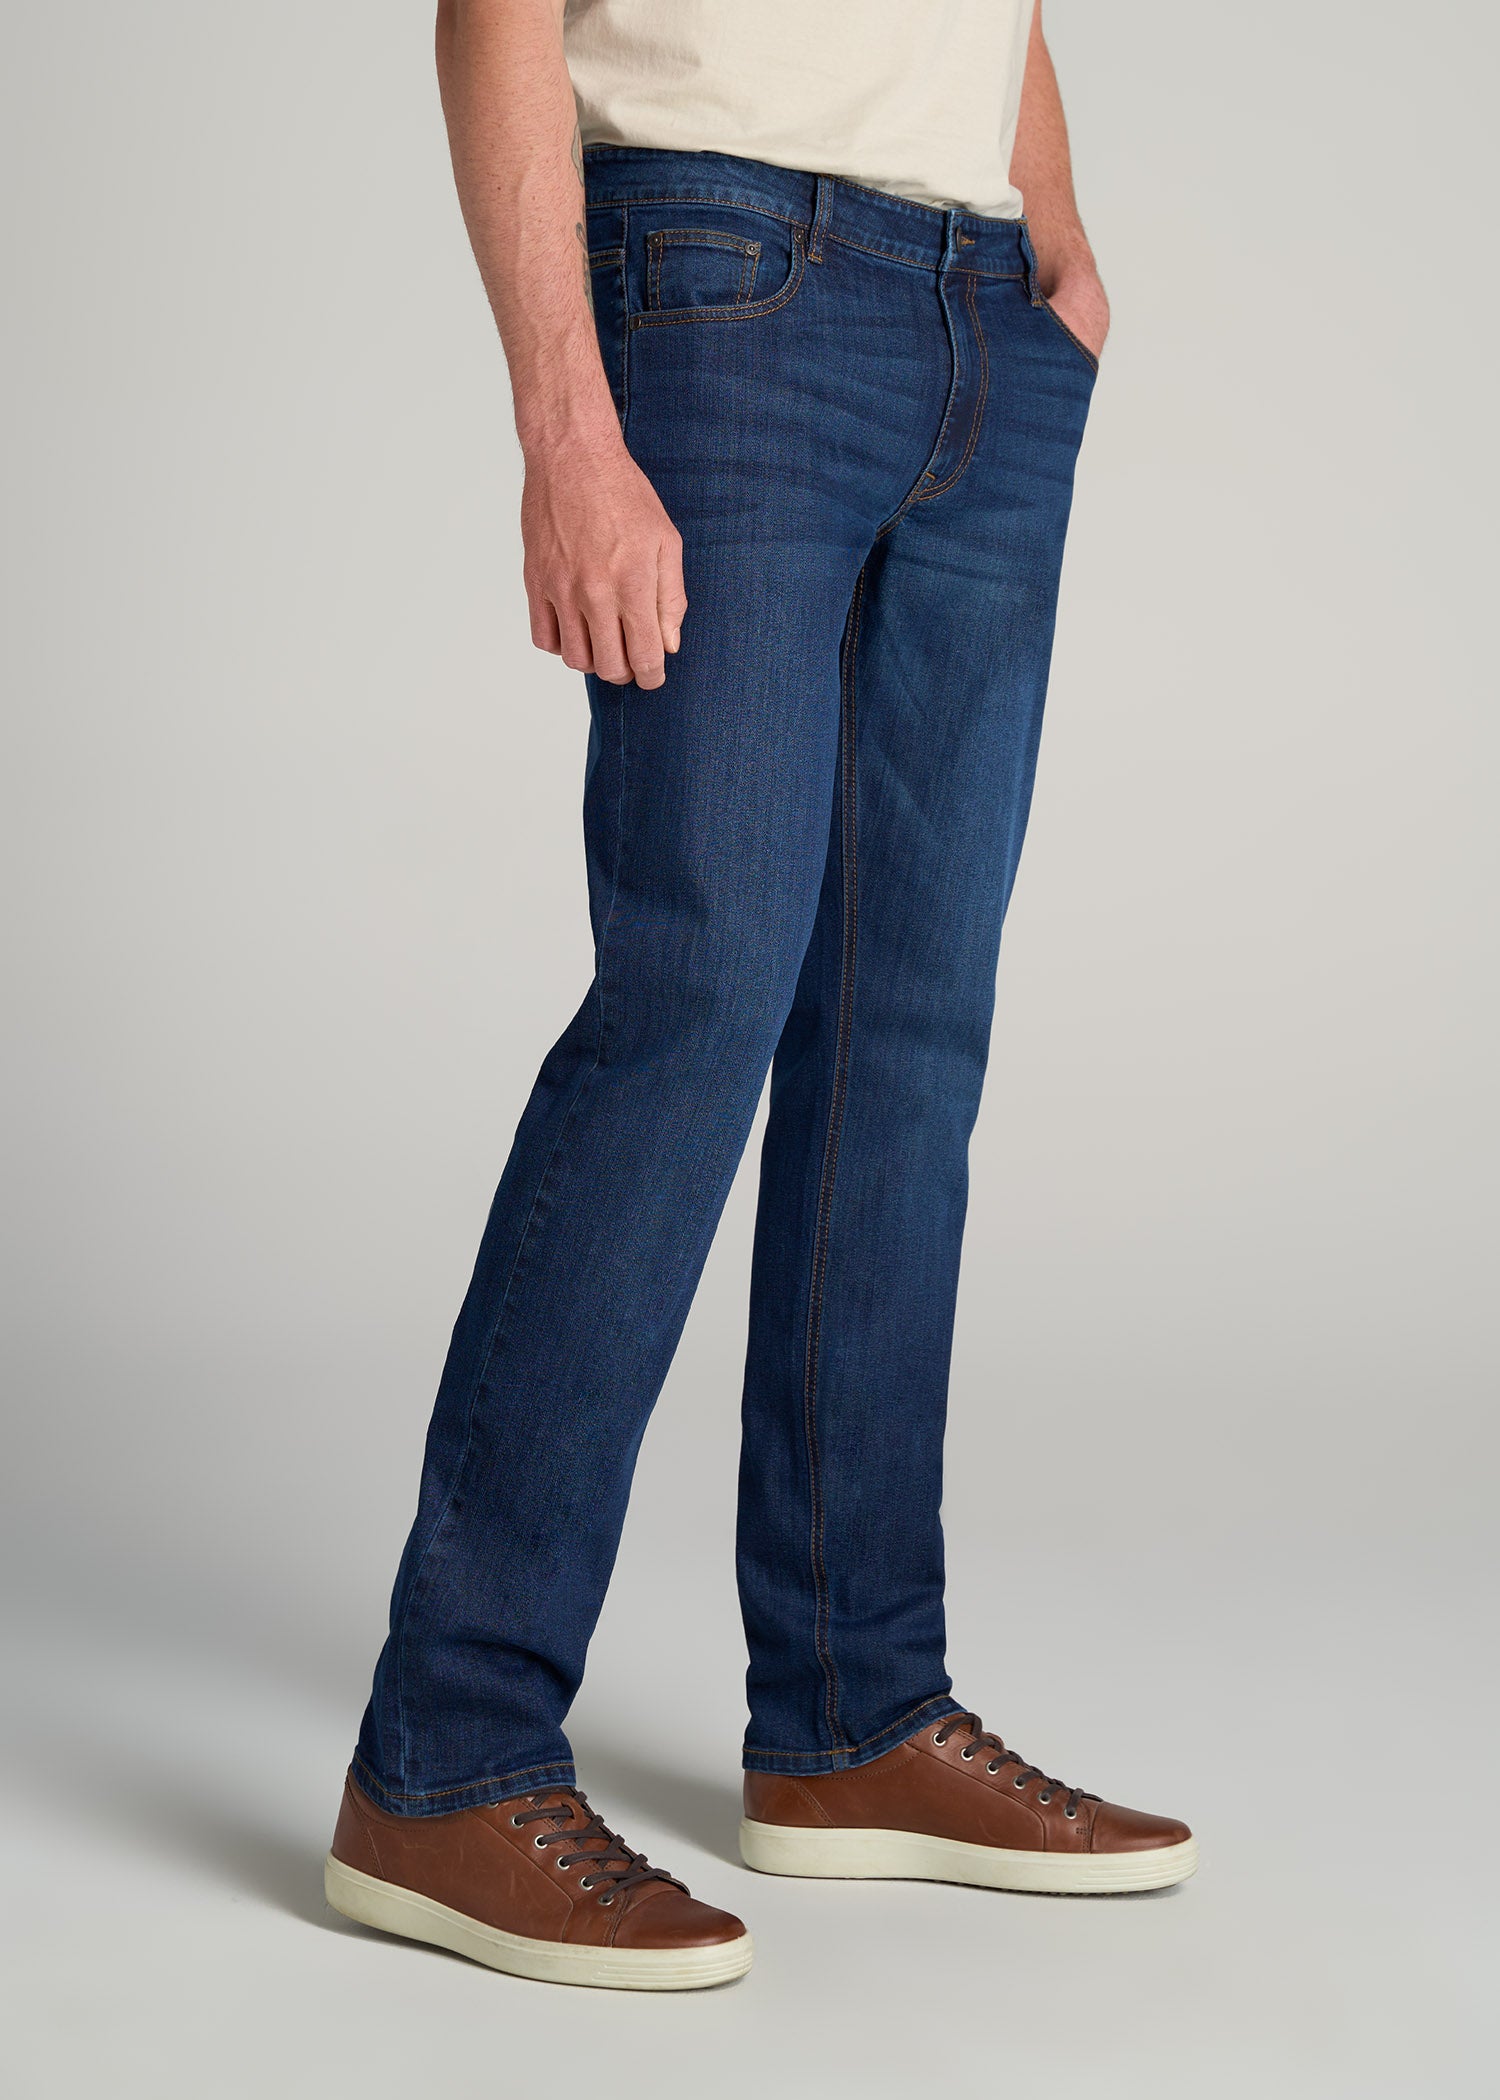 Men\'s Slim Taper Slim Carman Jeans: Fit Blue Jeans Tall Charger American – Taper